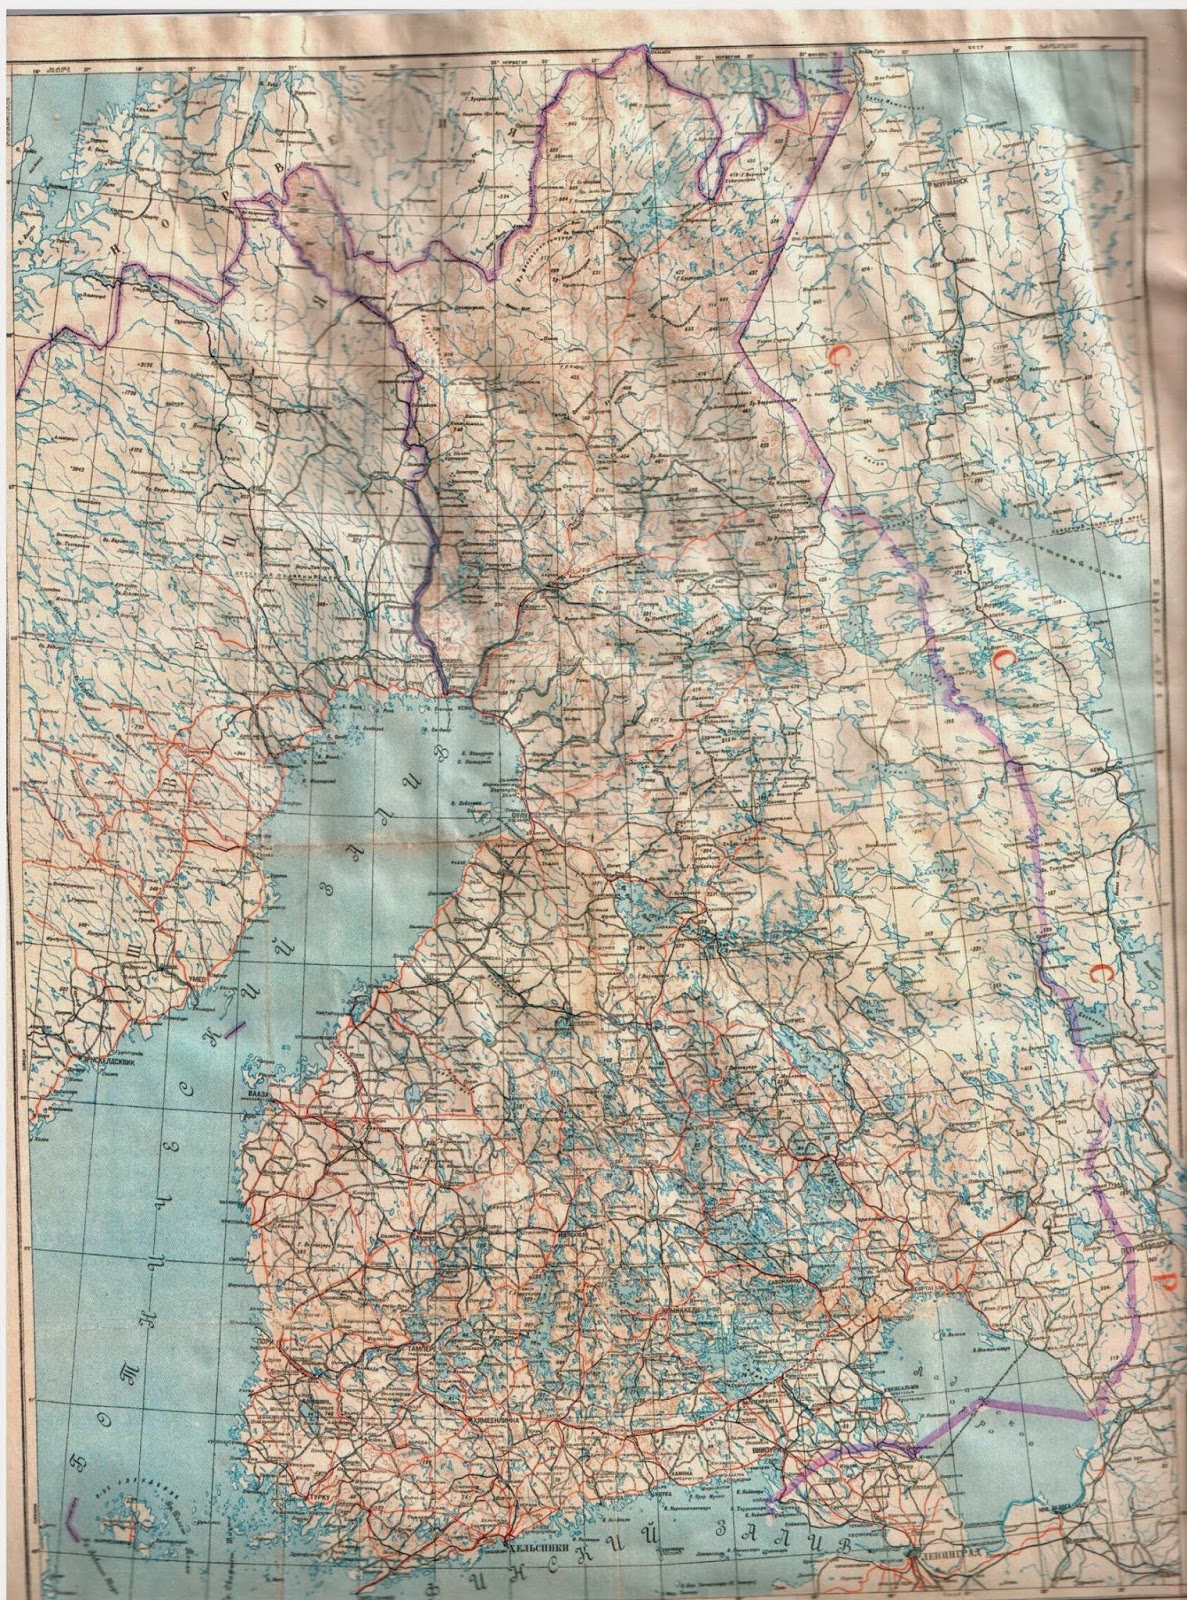 Граница финляндии до 1939 года. Граница Финляндии до 1939 года на карте. Старая граница Финляндии 1917. Финляндия до 1939 года карта и после. Карта Финляндии до 1939 года.